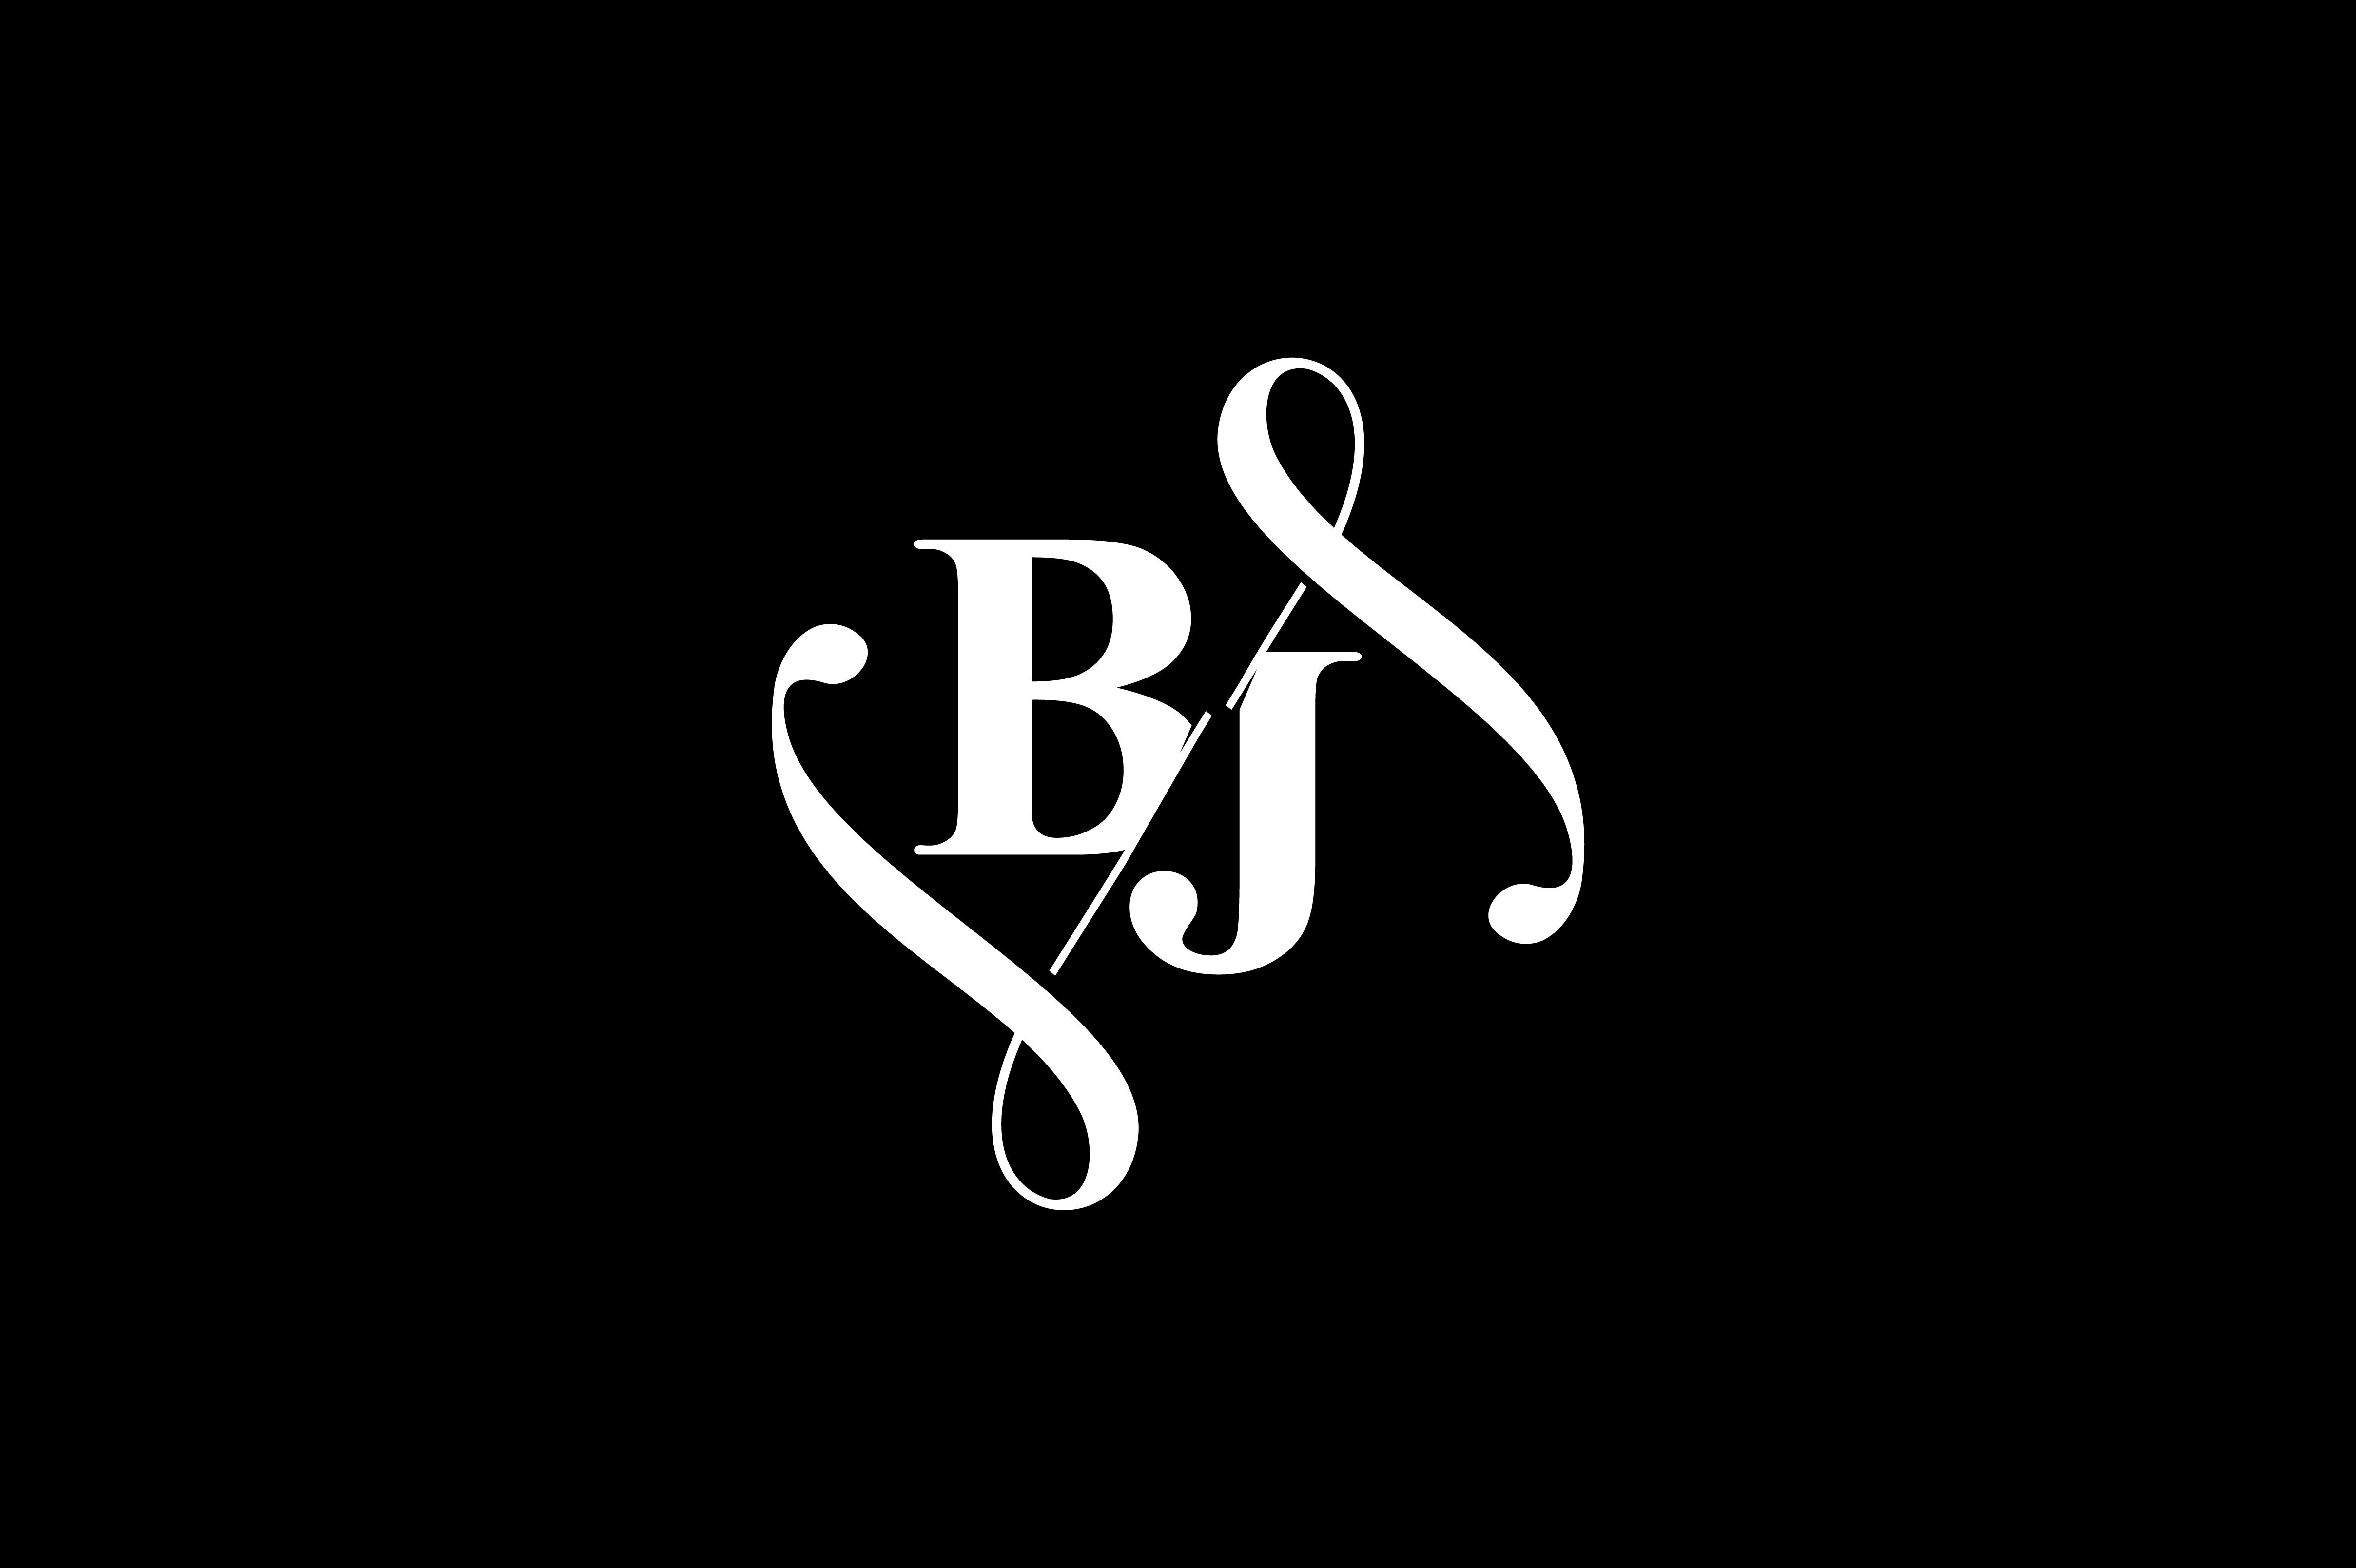 Bj logo letter design on luxury background. jb logo monogram canvas prints  for the wall • canvas prints flat, identity, fashion | myloview.com